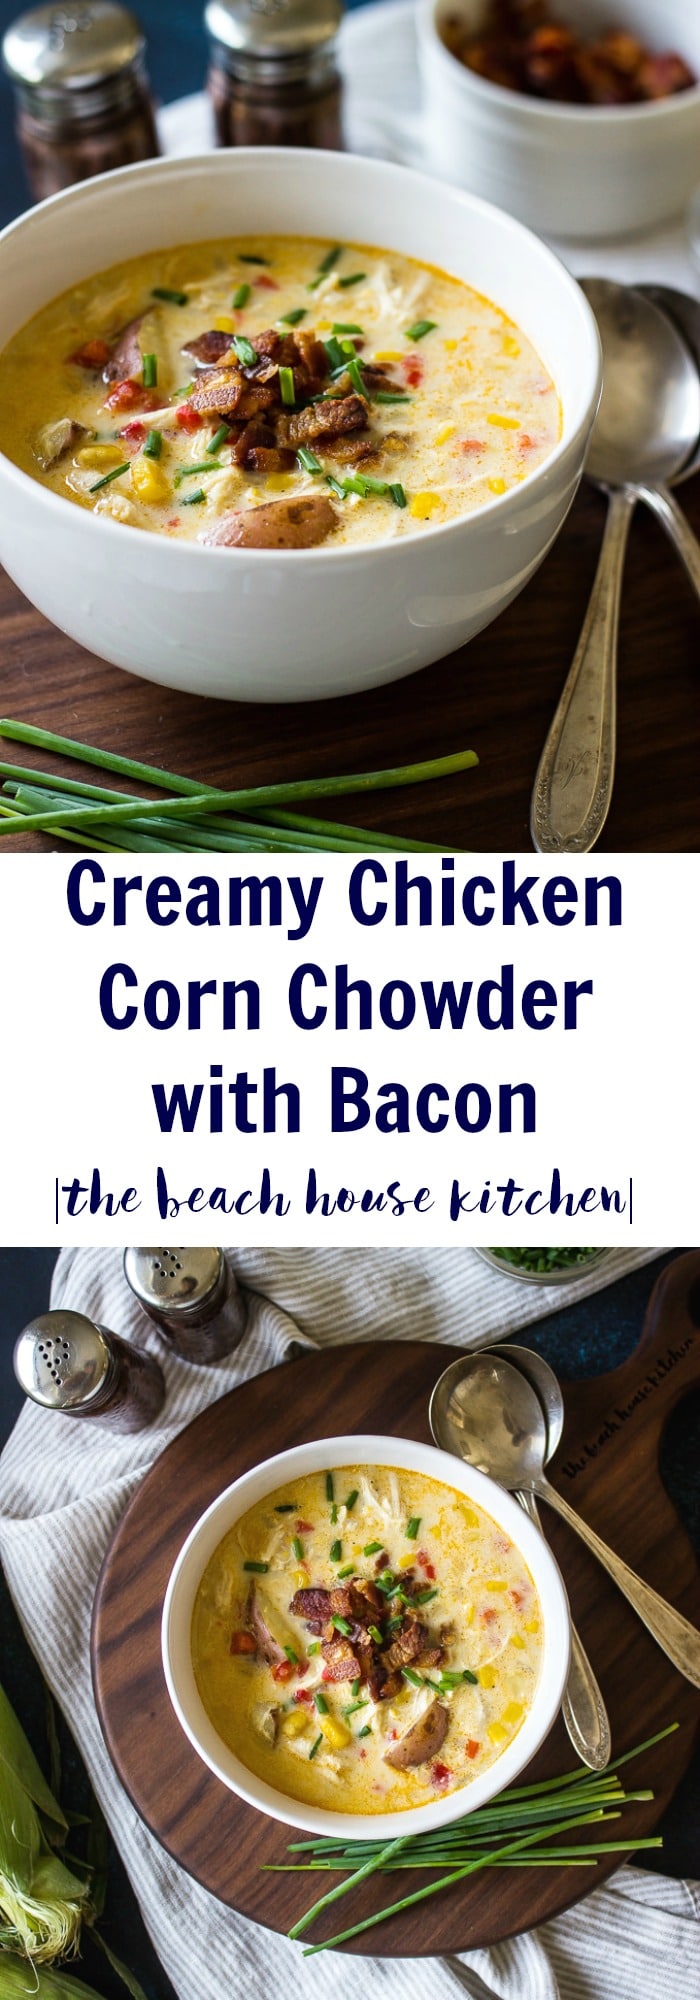 Creamy Chicken Corn Chowder with Bacon